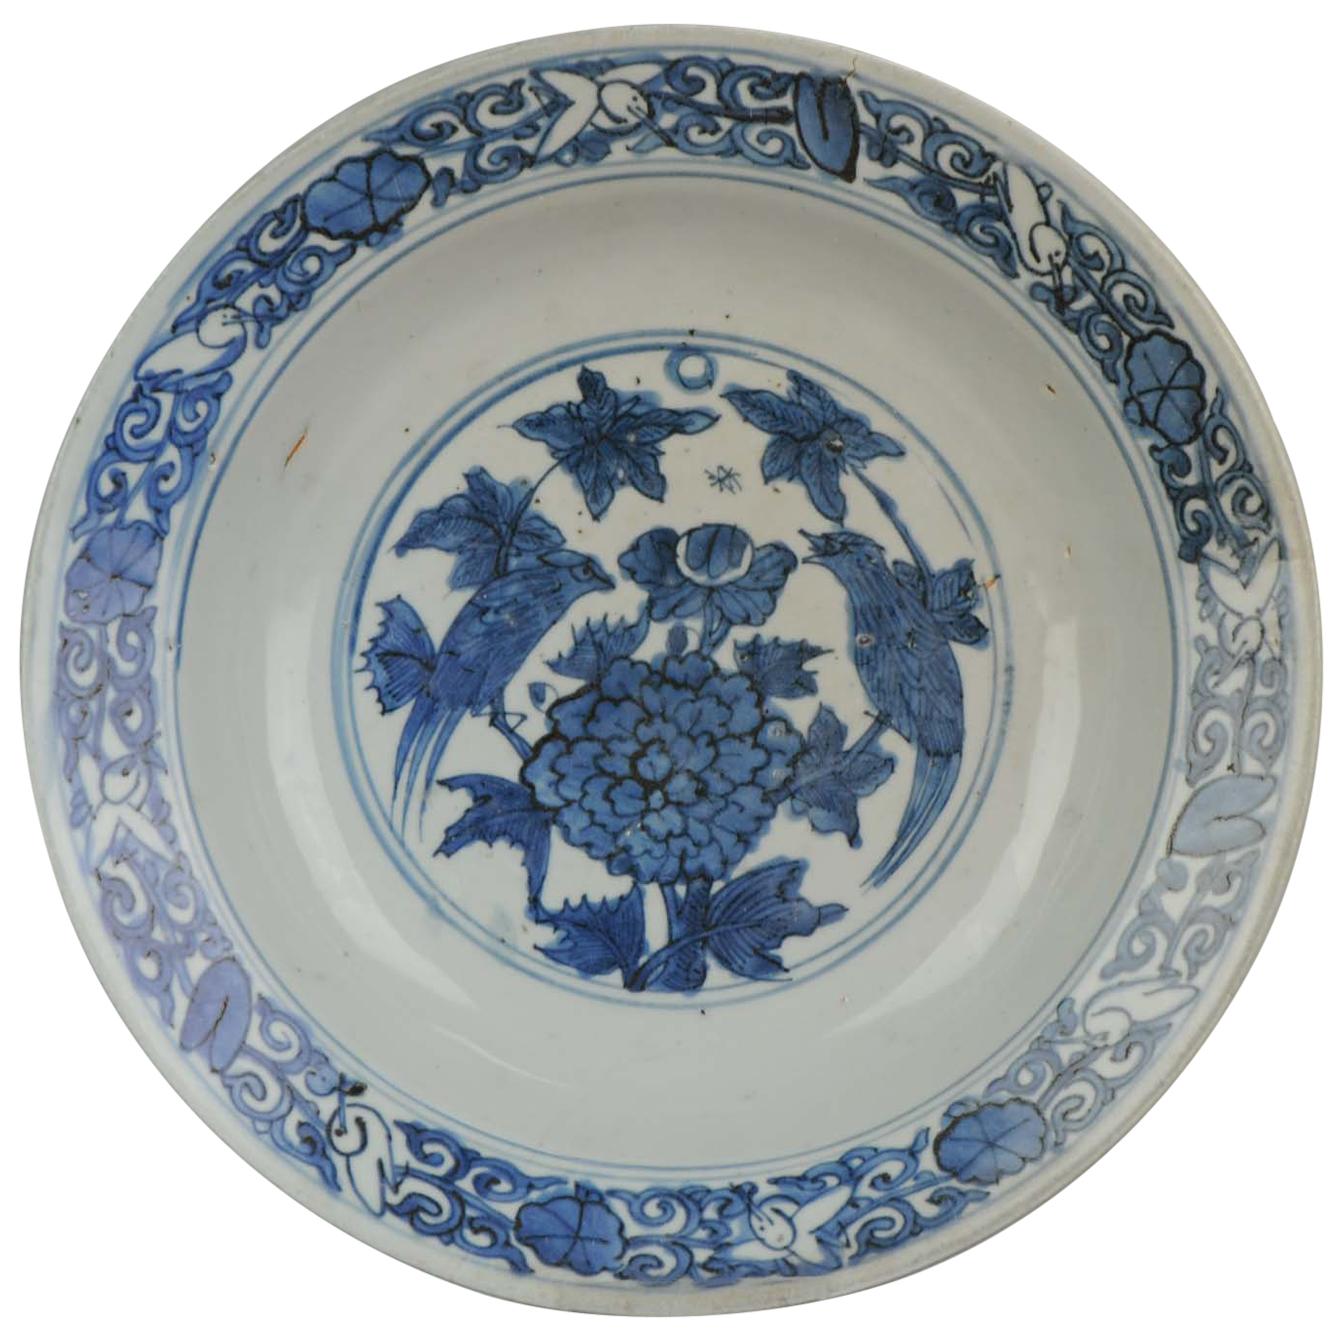 16th Century Period Chinese Porcelain Dish Charger Two Birds Antique Jiajing/Wan